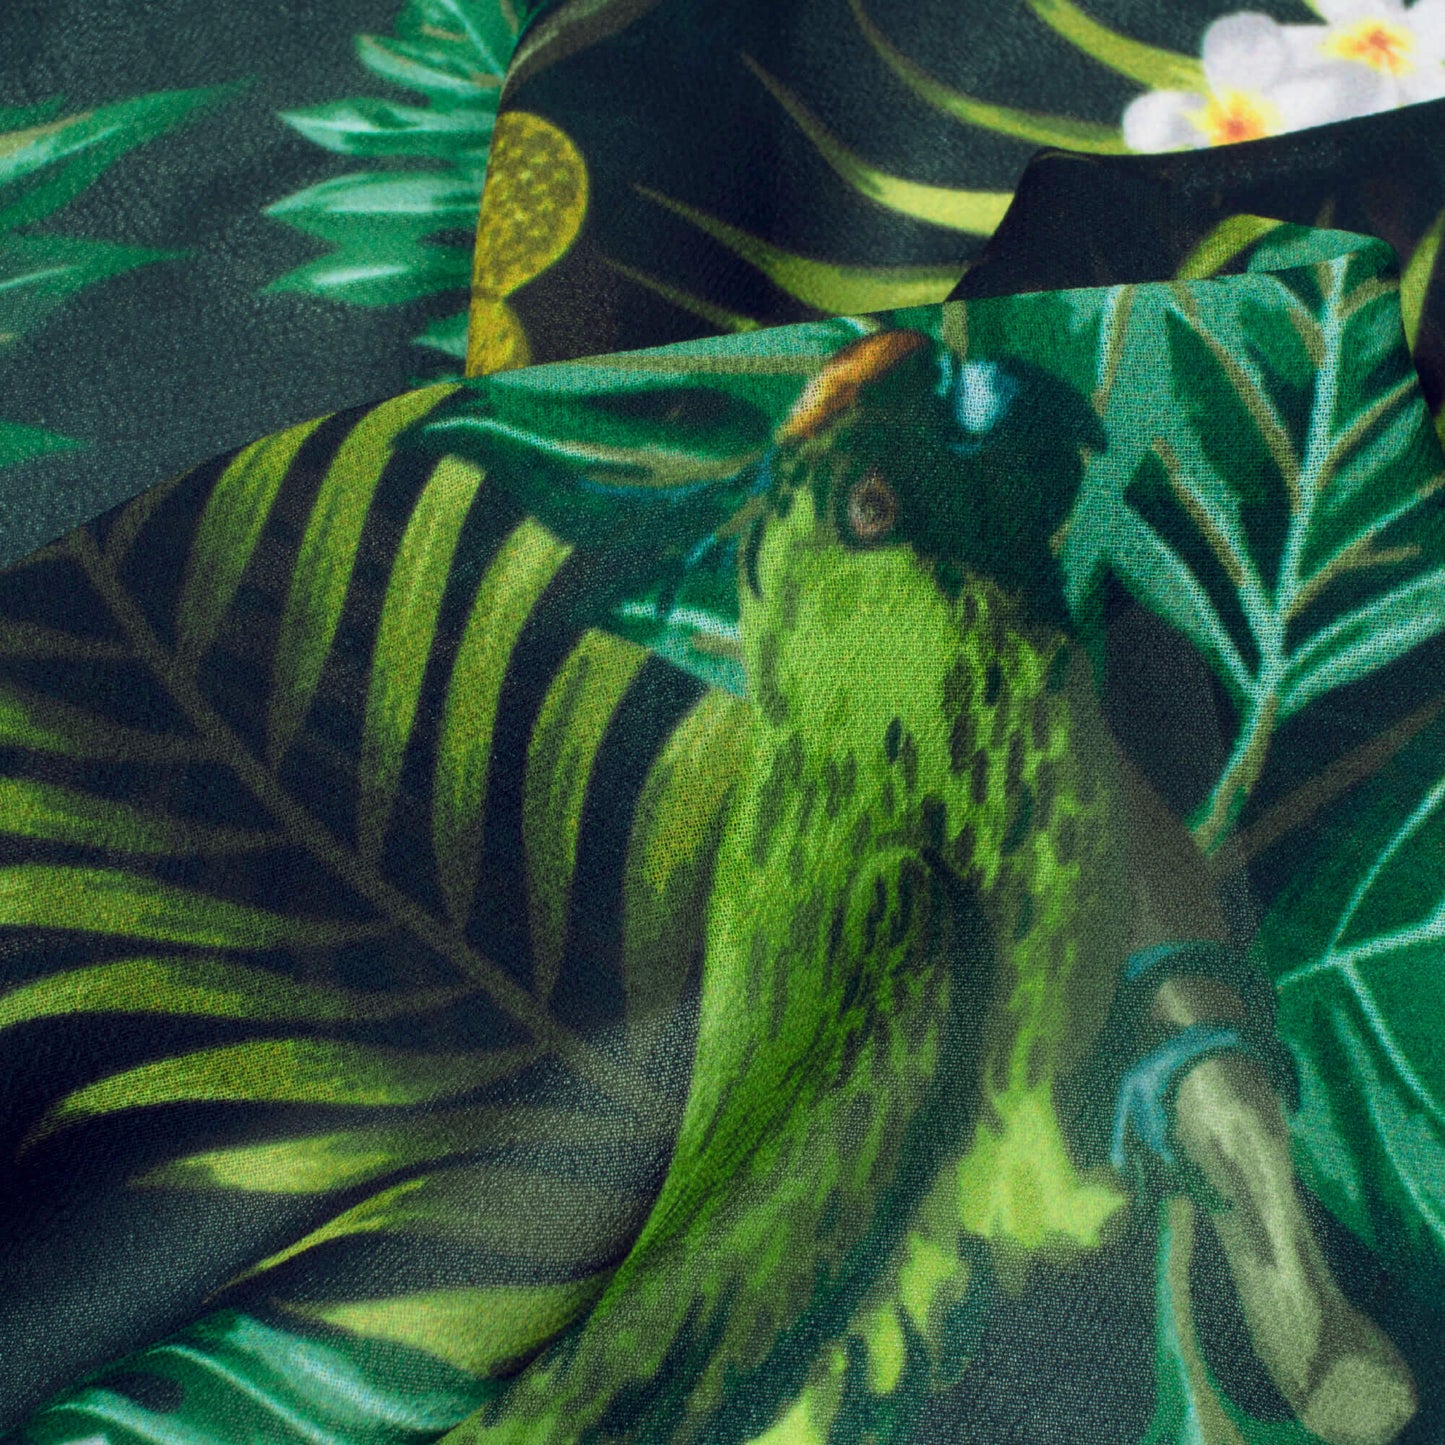 Black And Green Tropical Pattern Digital Print Georgette Fabric